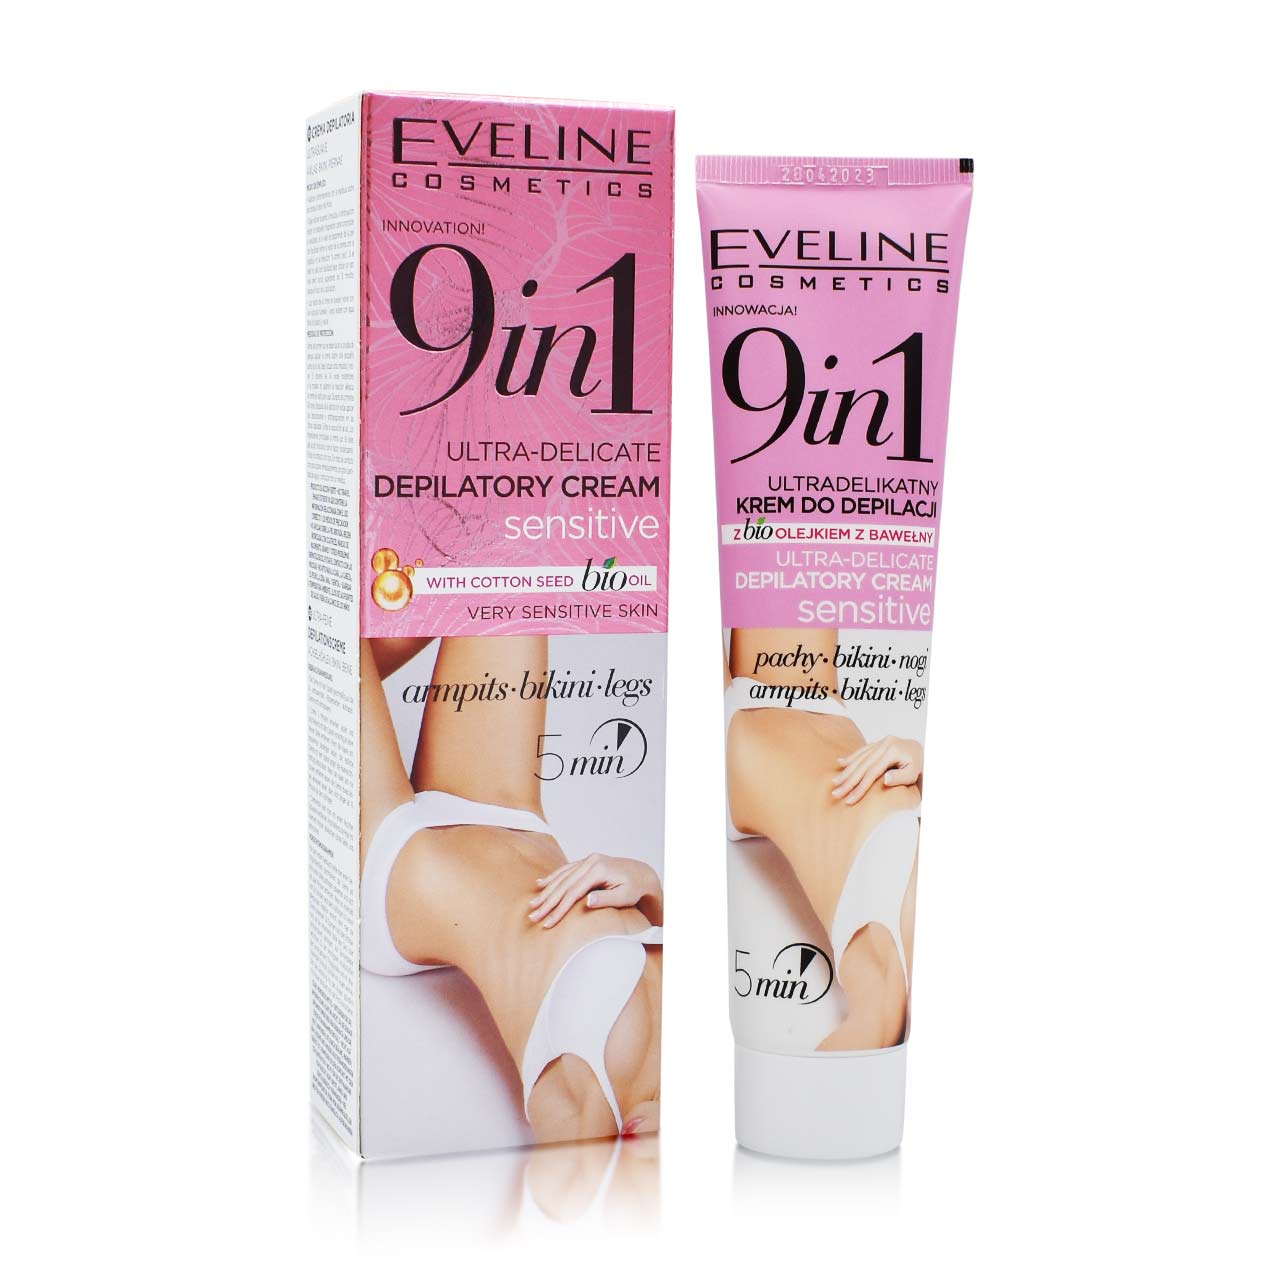 97-5901761987249-Eveline Cosmetics Sensitive 9IN1 Ultra Delicate Depilatory Cream 125ml